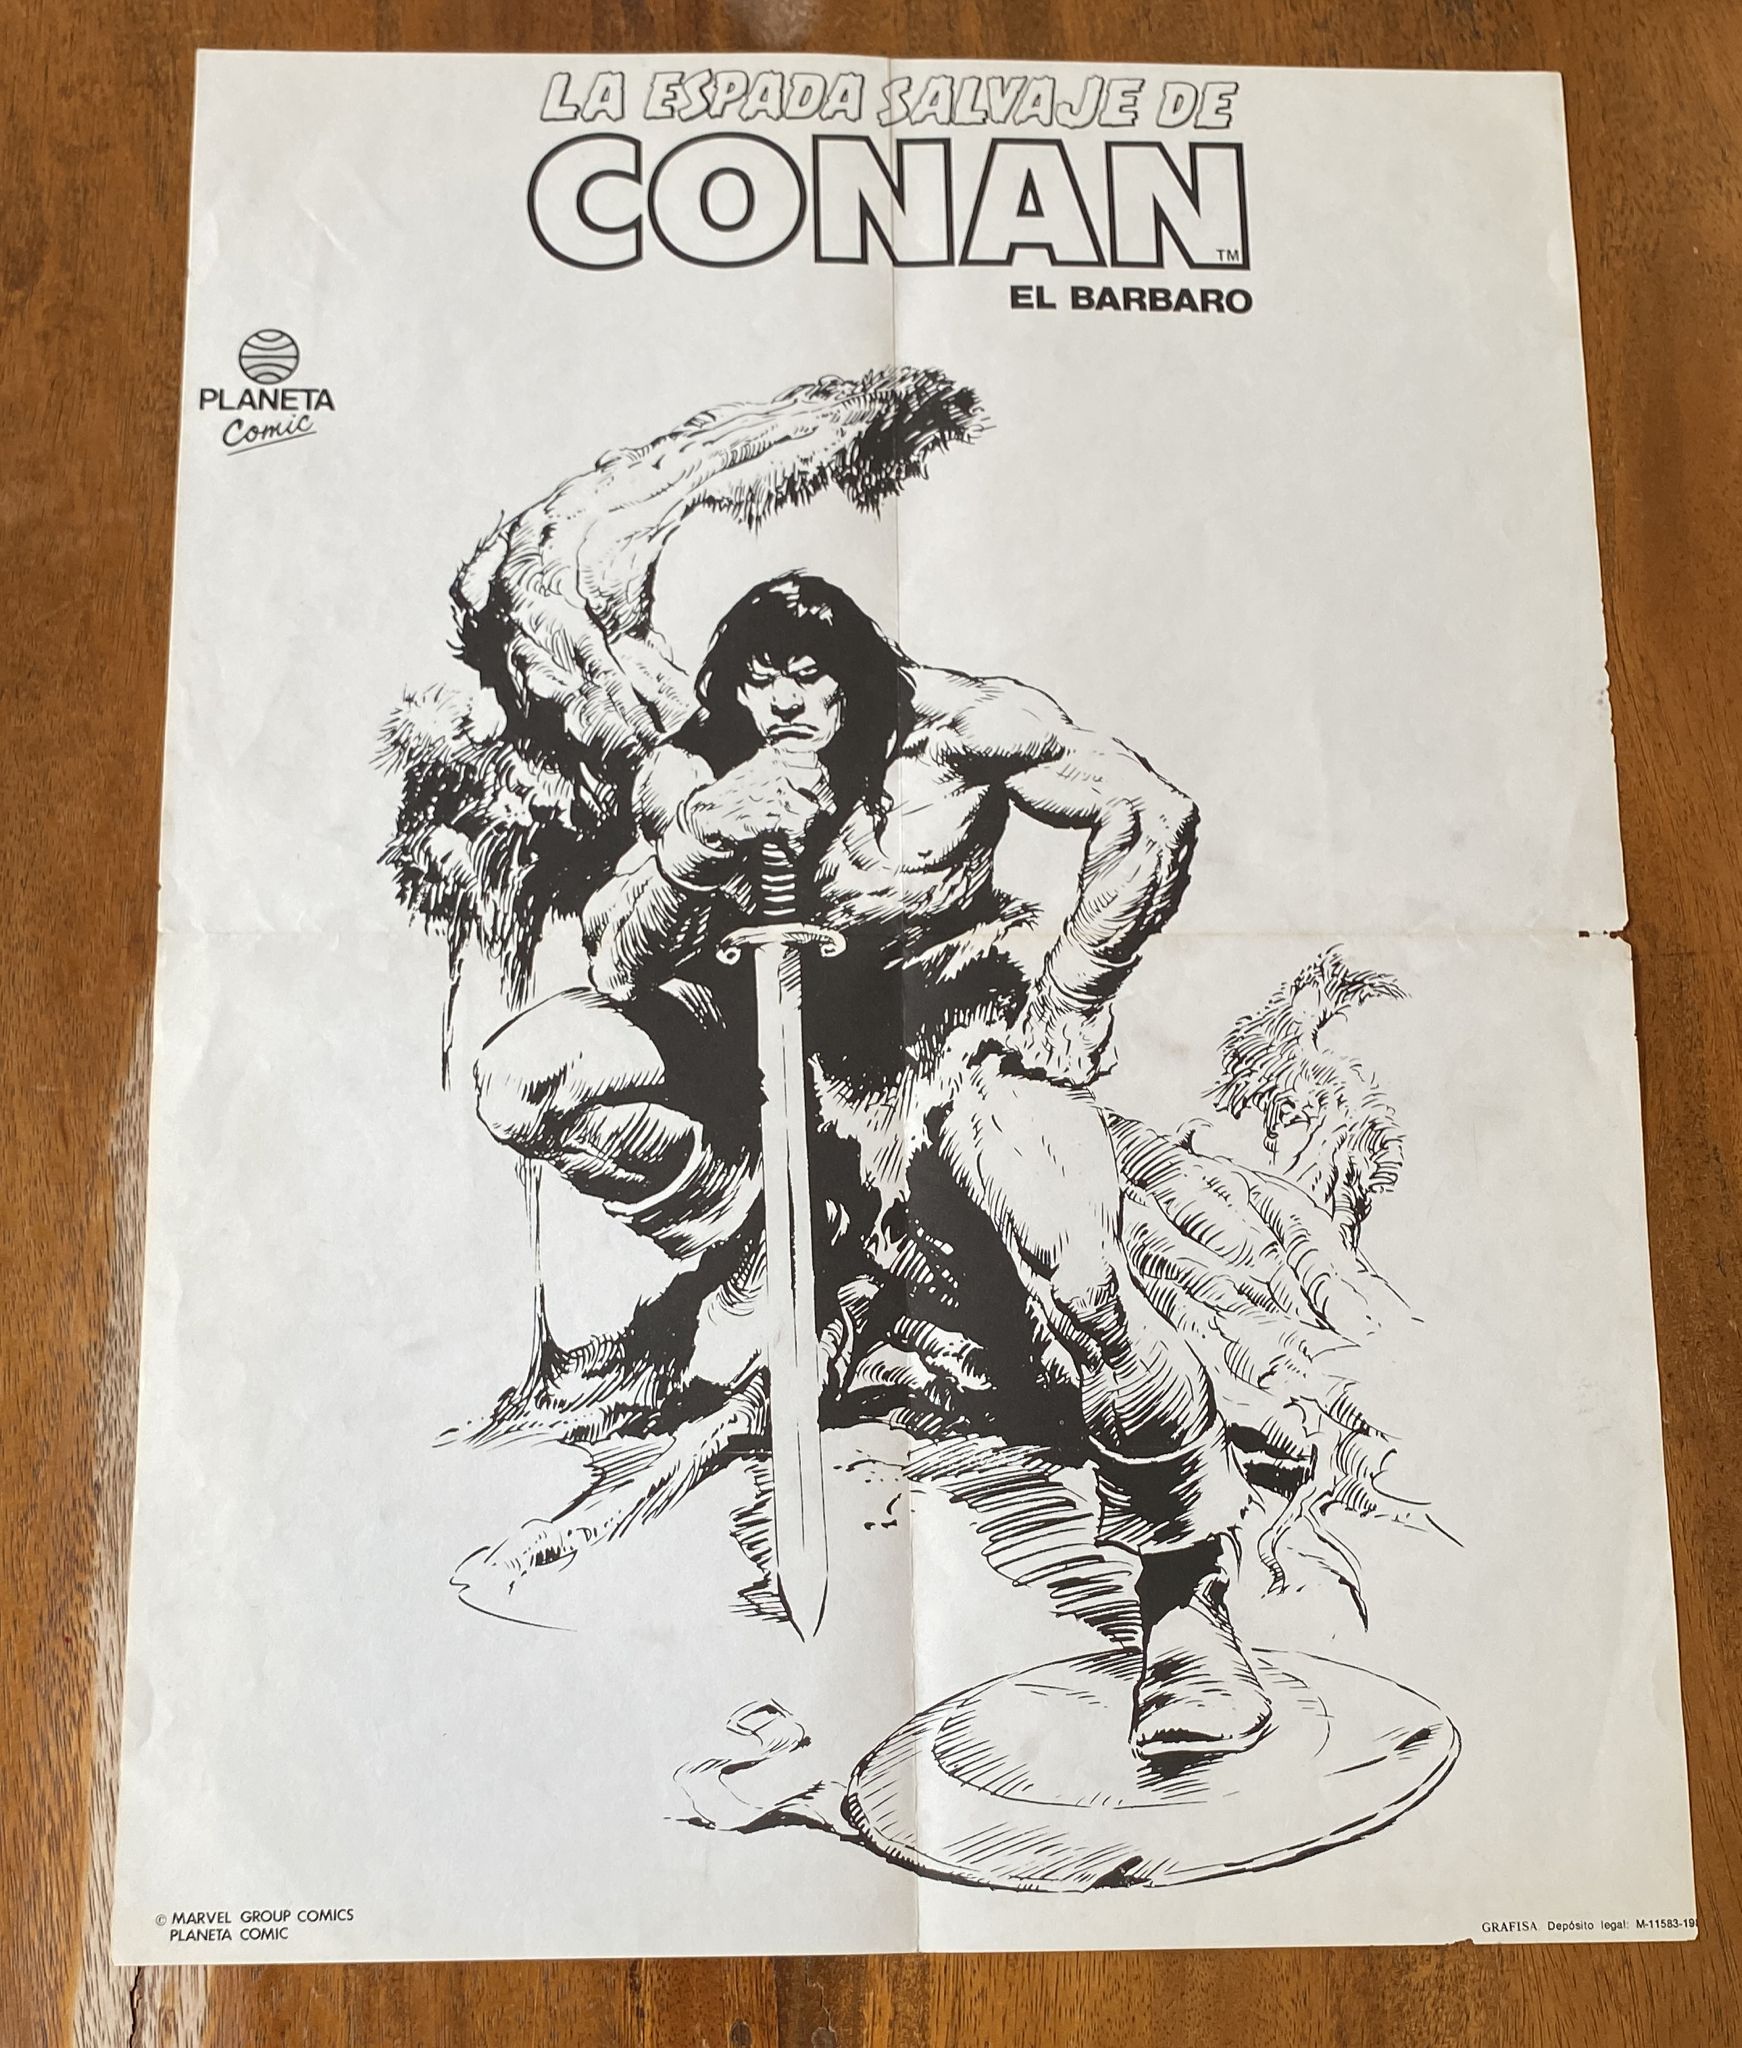 La Espada Salvaje de Conan. Cartel (53x39) de Planeta